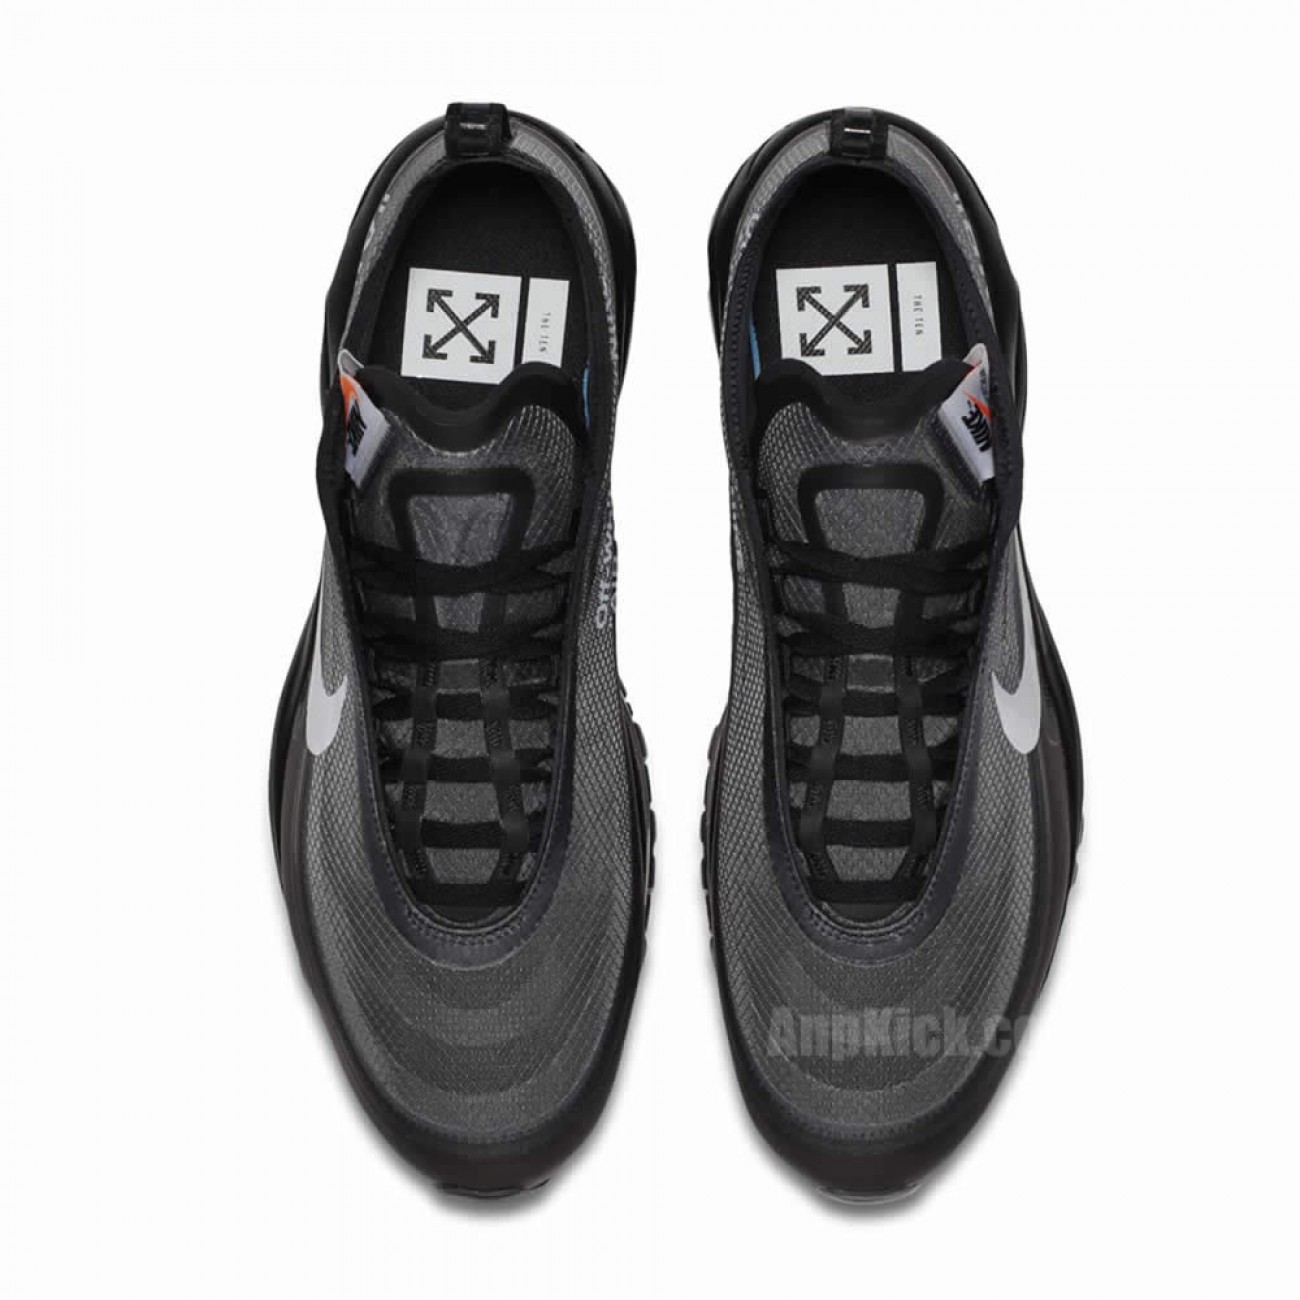 Off-White x Nike Air Max 97 OG "All Black/Cone" AJ4585-001